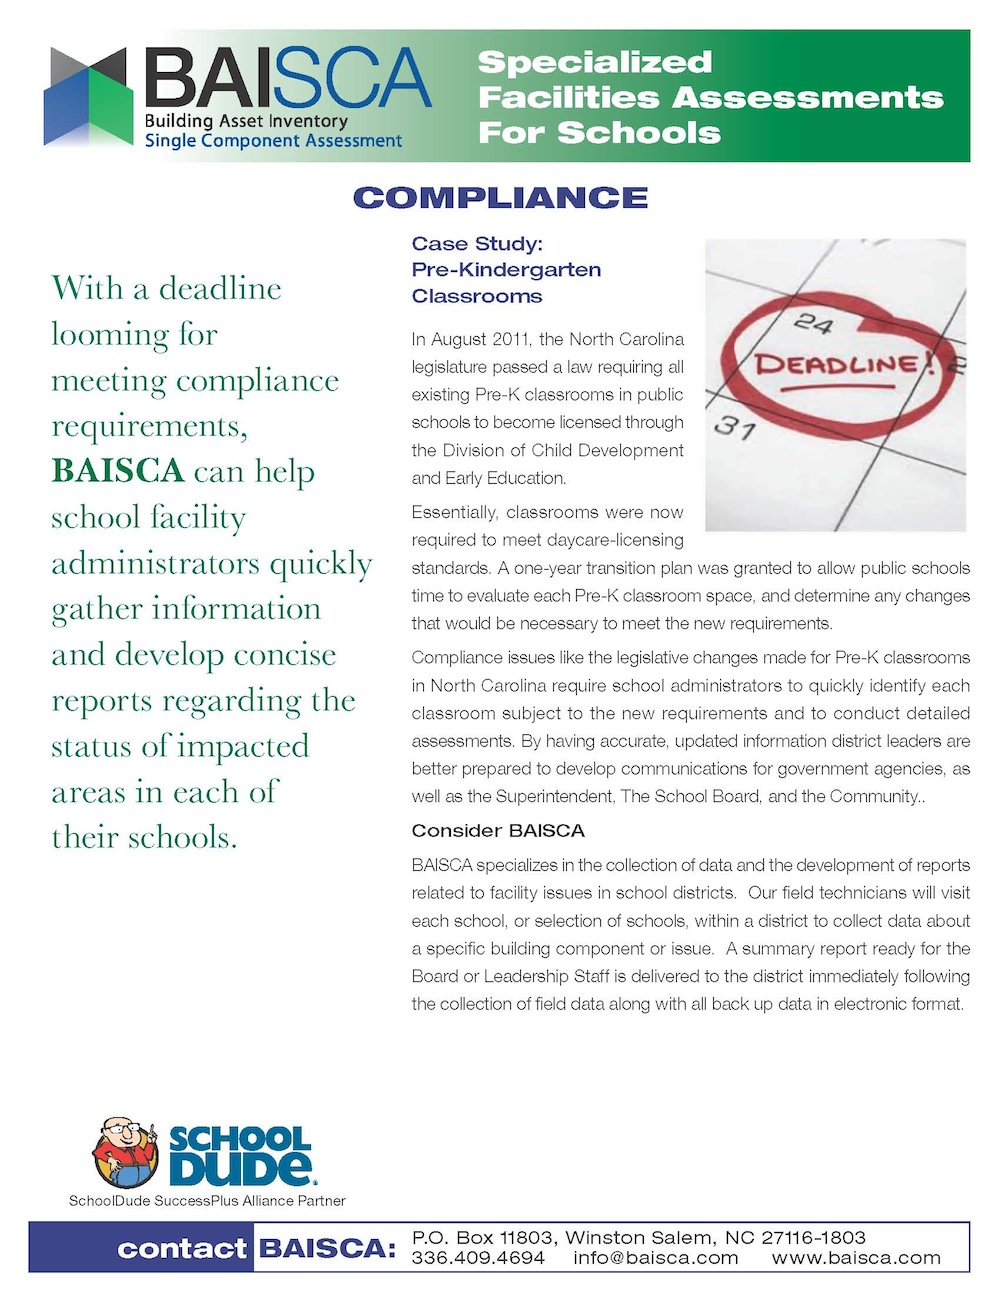 BAISCA_Compliance_1000